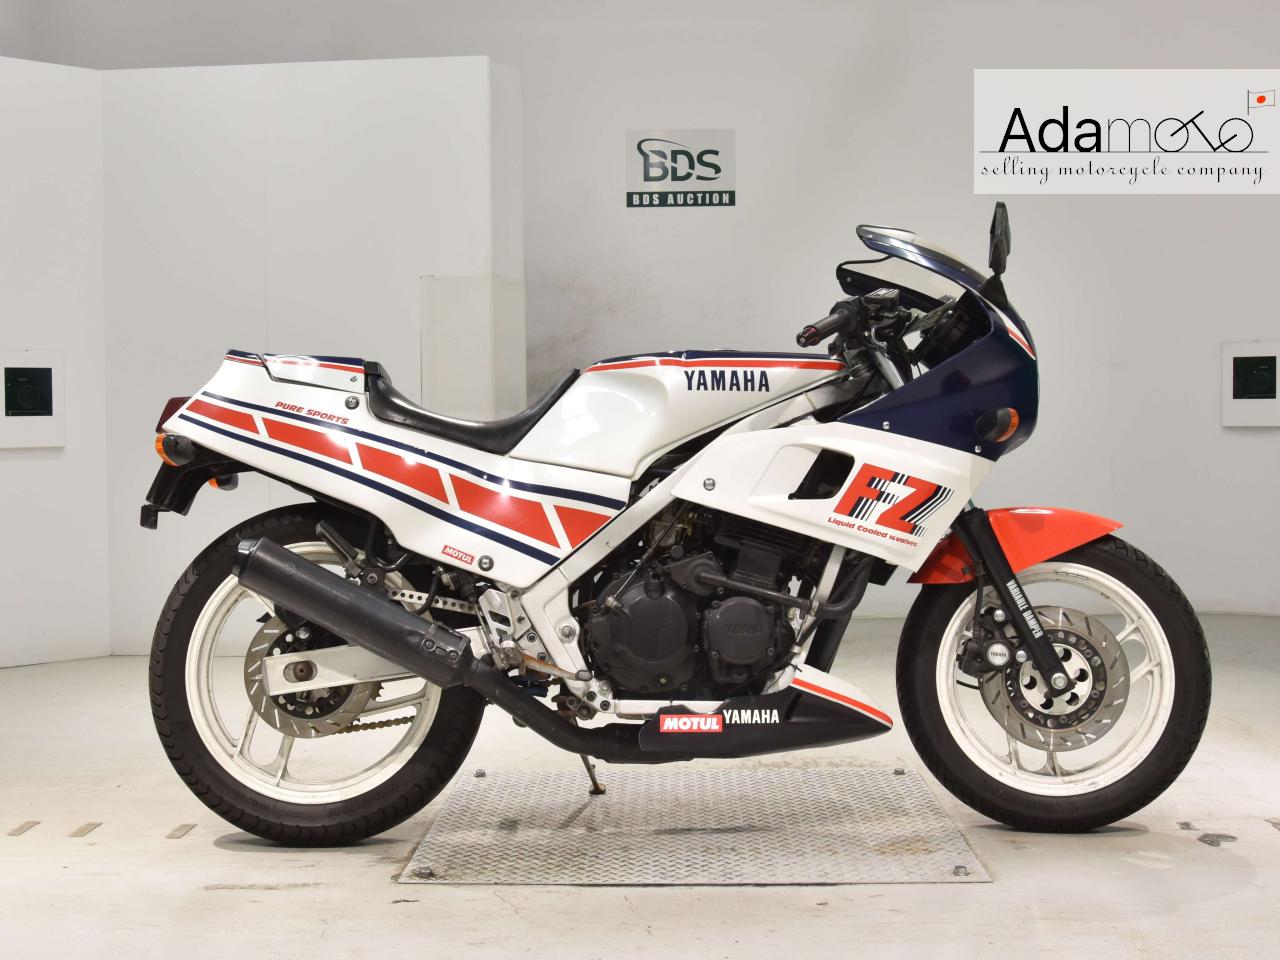 Yamaha FZ400R - Adamoto - Motorcycles from Japan